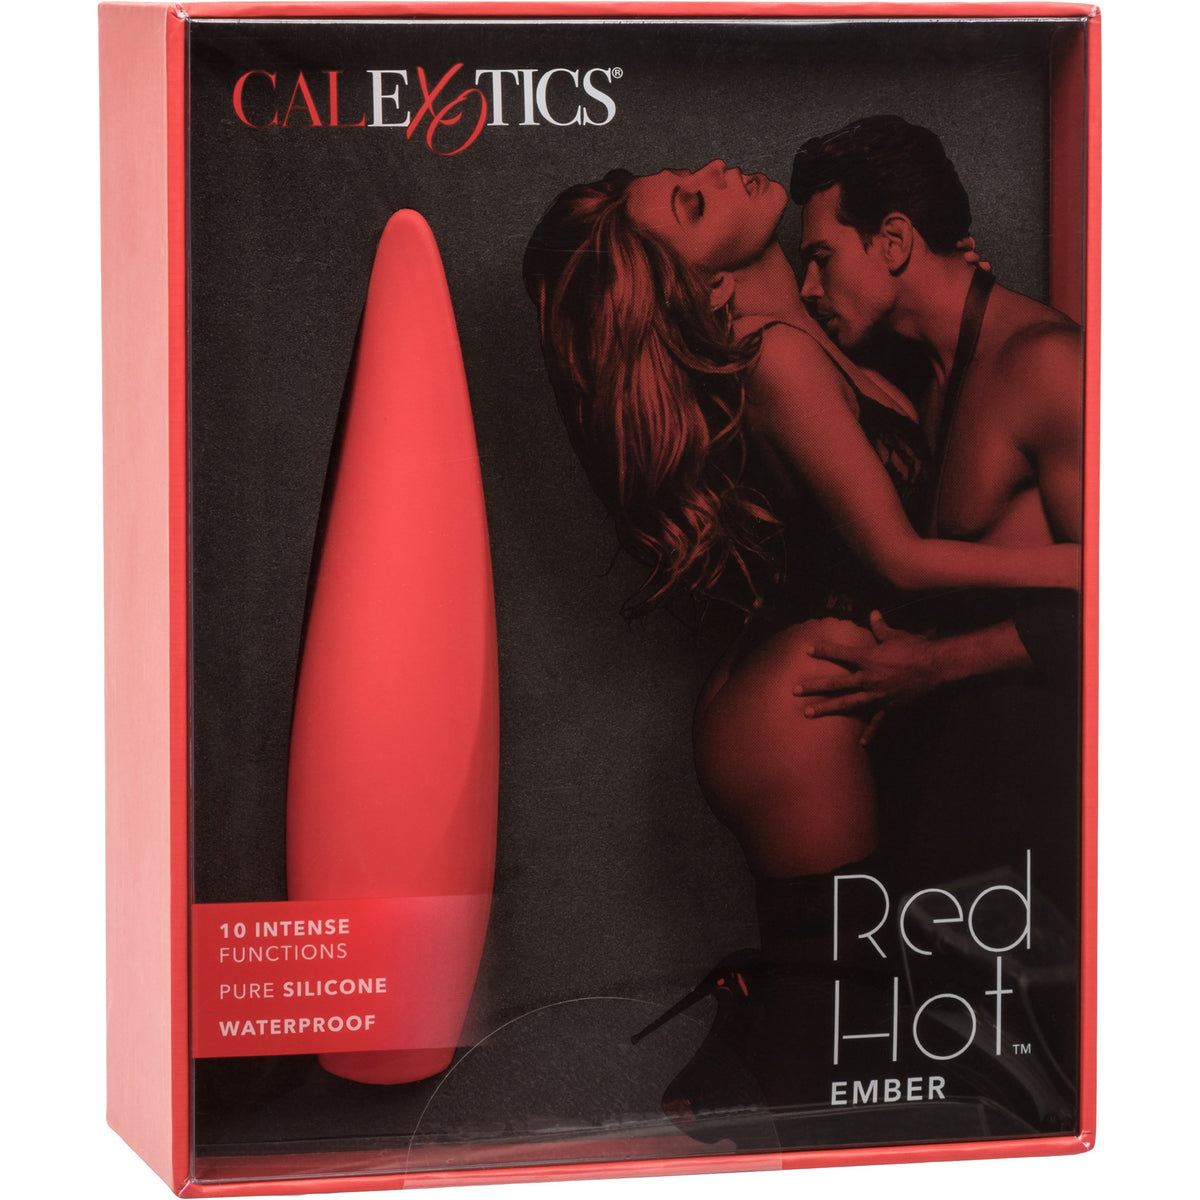 CalExotics Red Hot - Ember